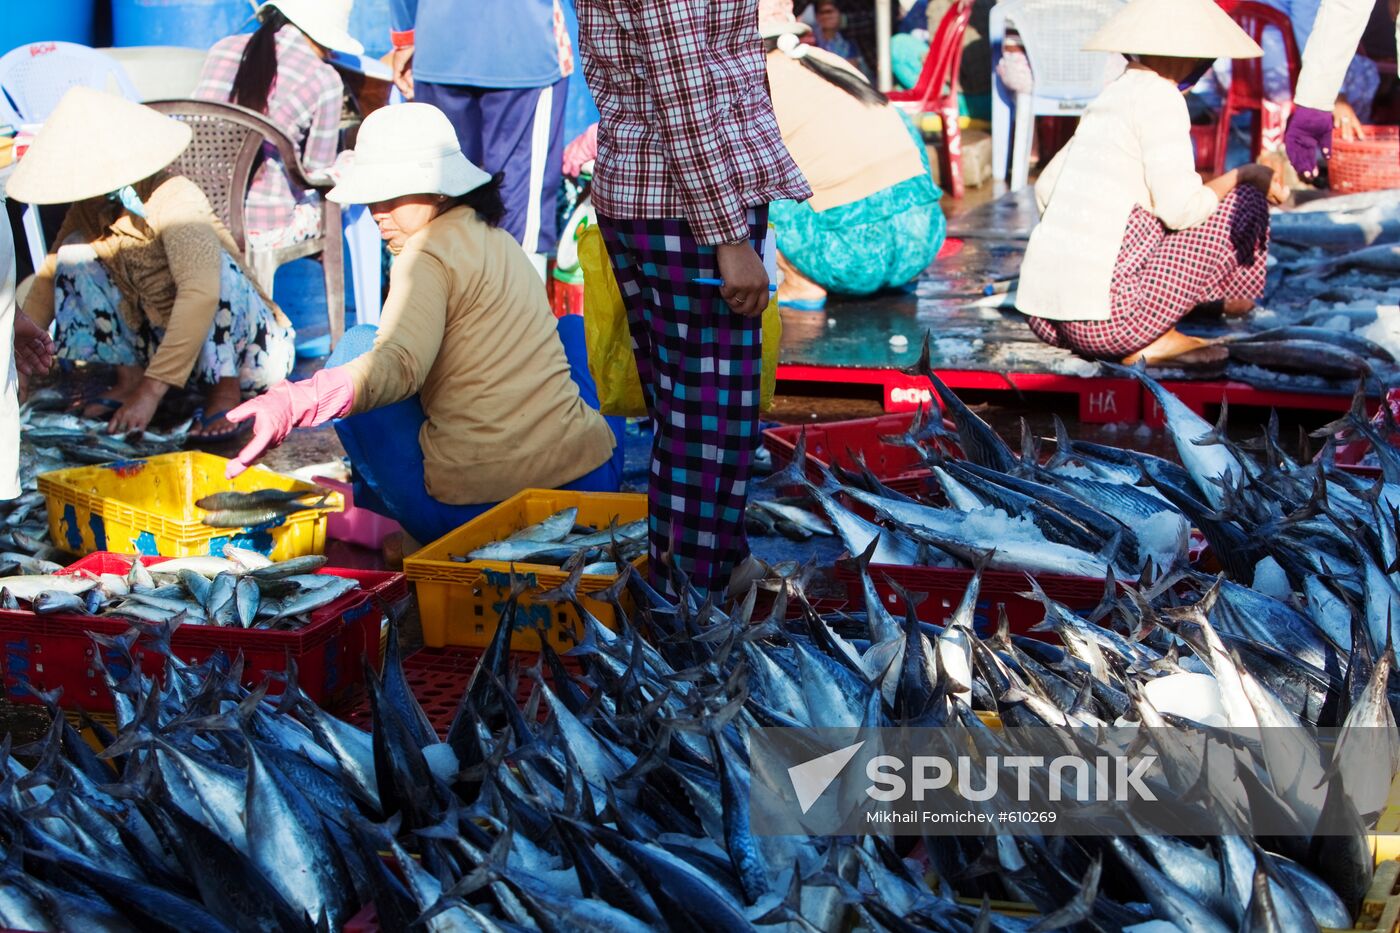 Fish market in Phan Thiet